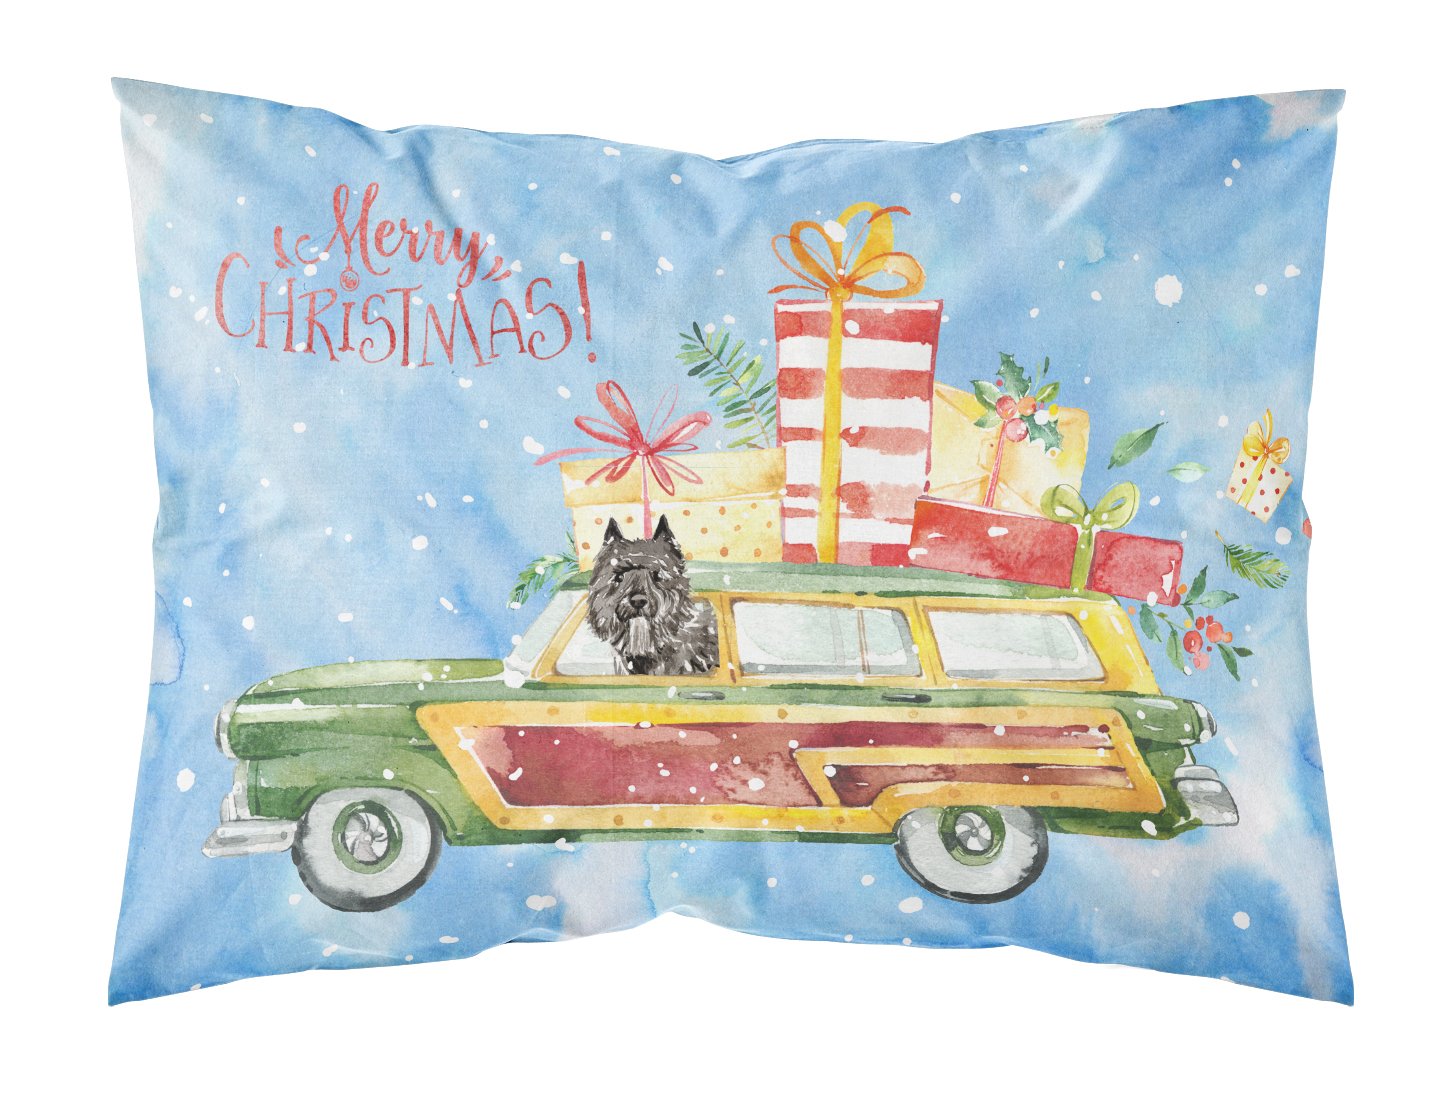 Merry Christmas Bouvier des Flandres Fabric Standard Pillowcase CK2398PILLOWCASE by Caroline's Treasures